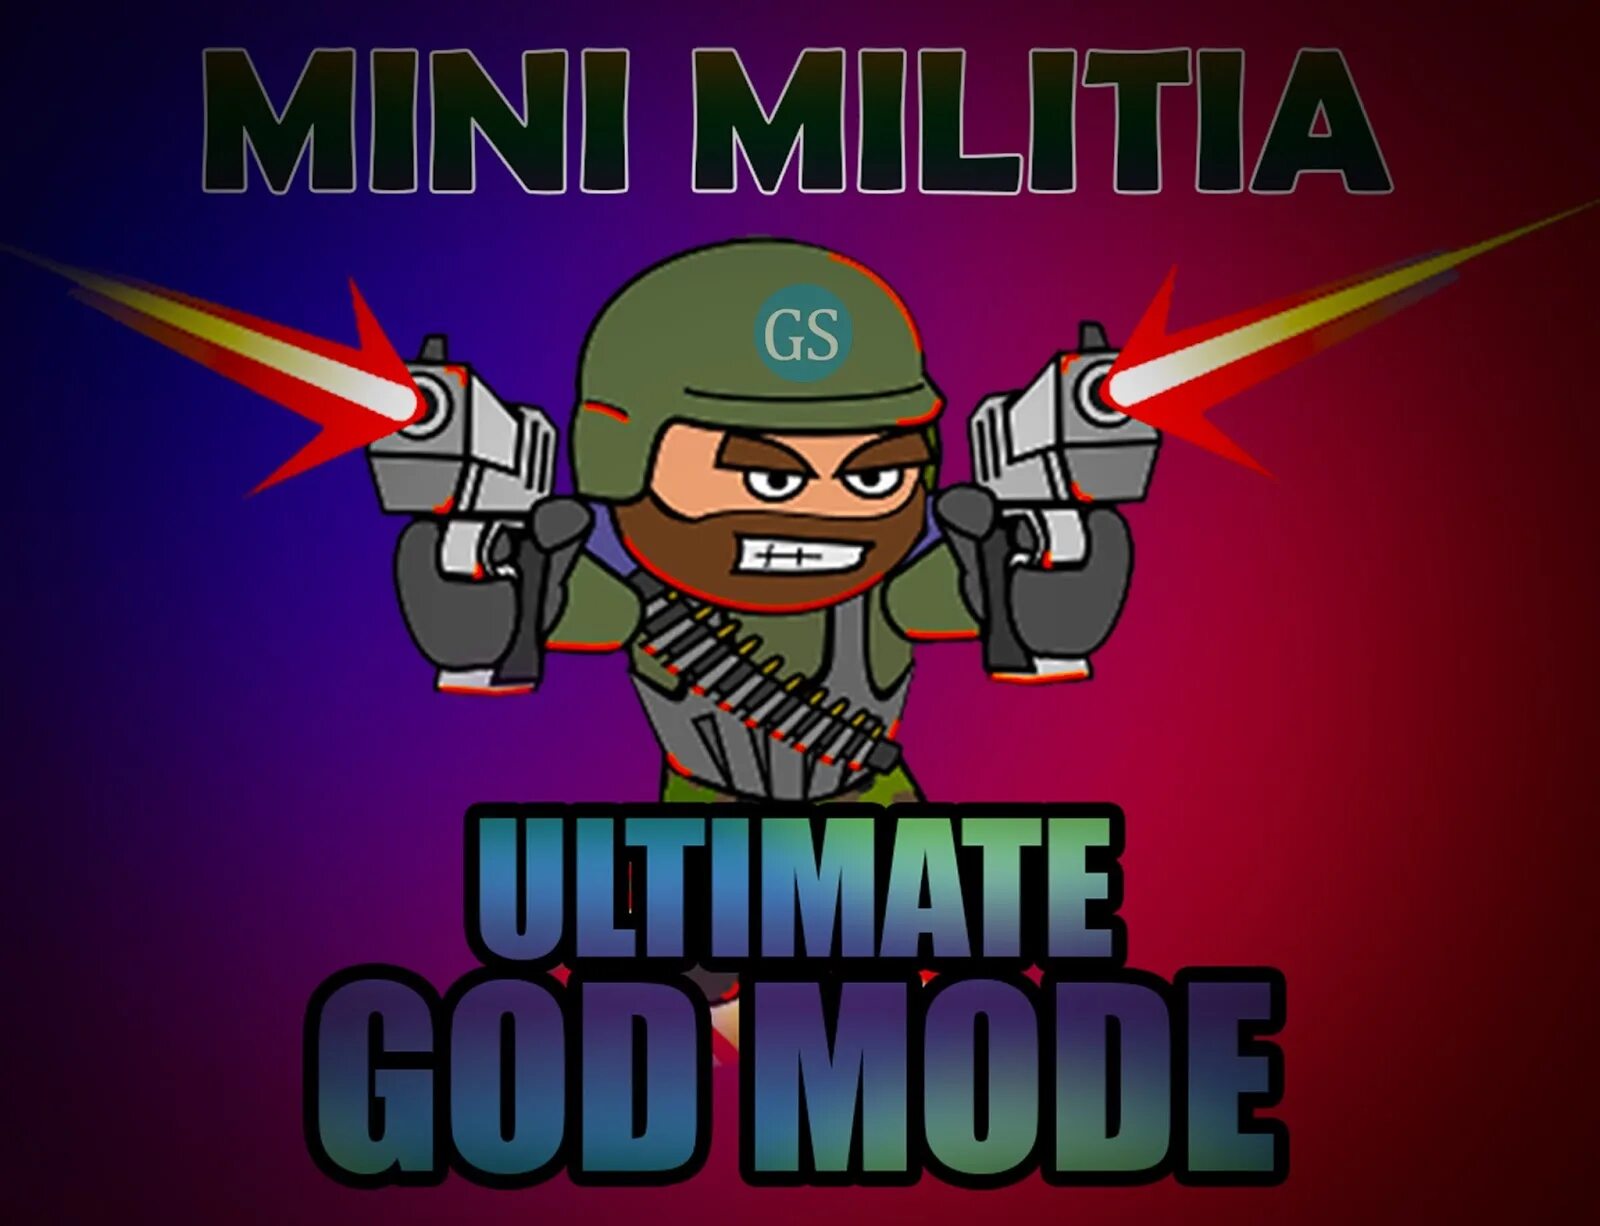 Mini Militia 2. Mini militiya. Игра мини милита. Mini Militia 1. Игра мини милития